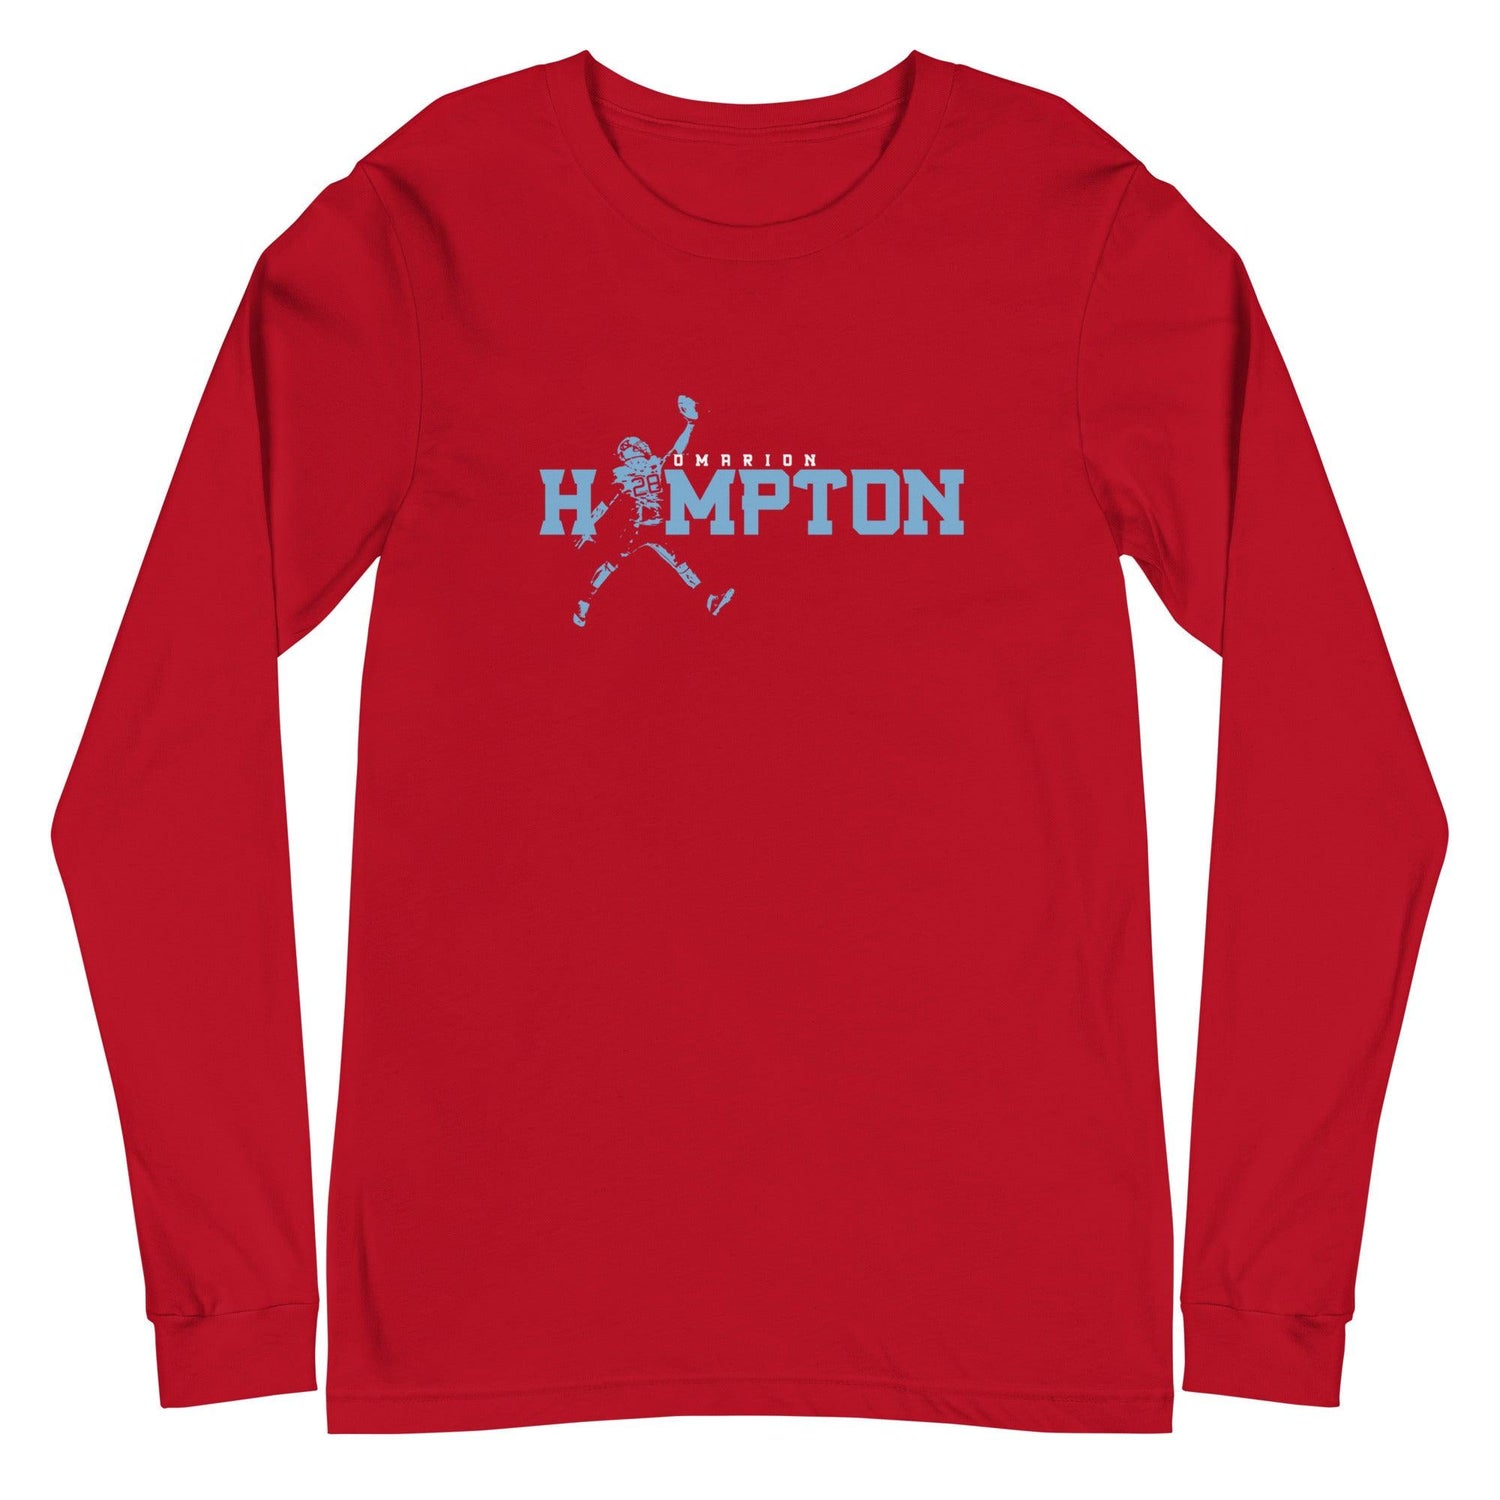 Omarion Hampton "Next Level" Long Sleeve Tee - Fan Arch